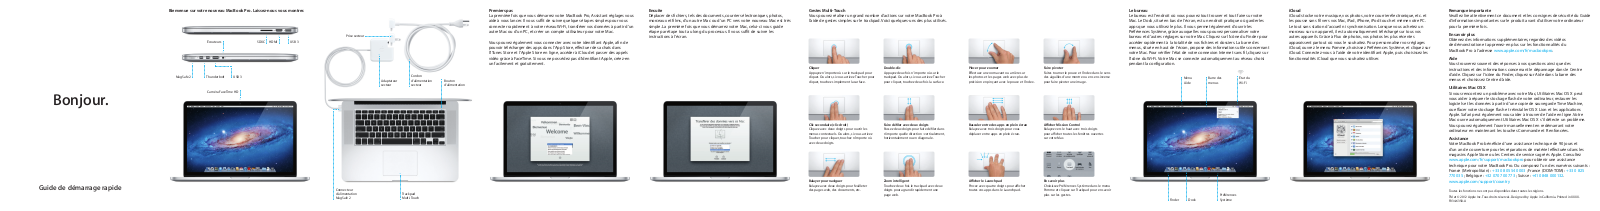 APPLE MacBook Pro User Manual